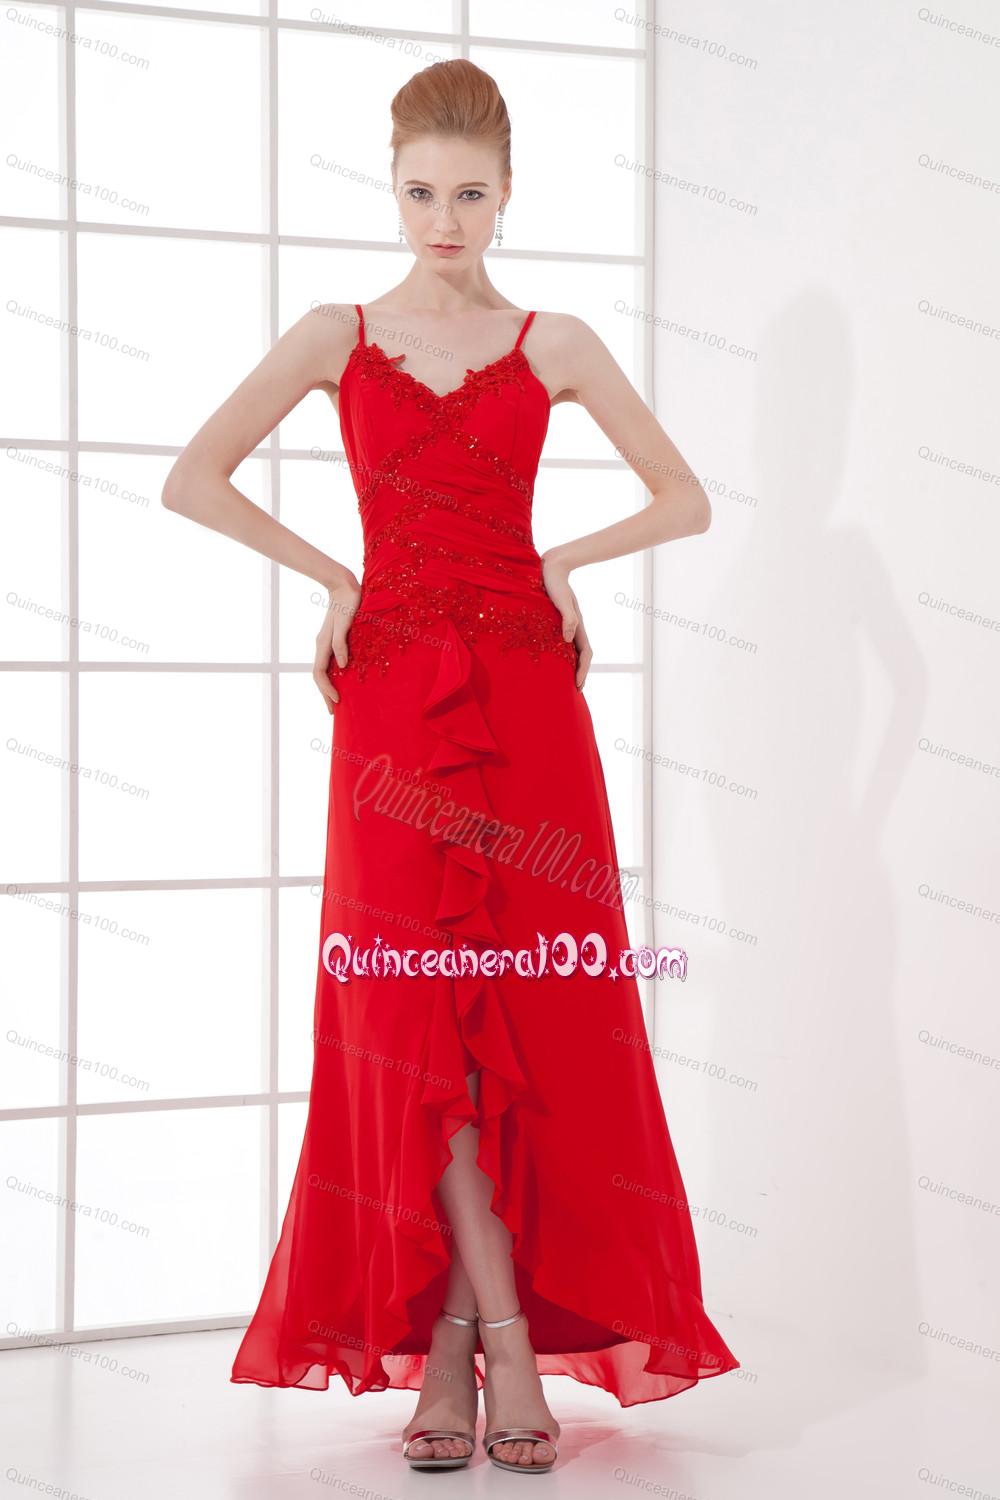 Spaghetti Straps Tea-length Chiffon Red Dresses for Dama